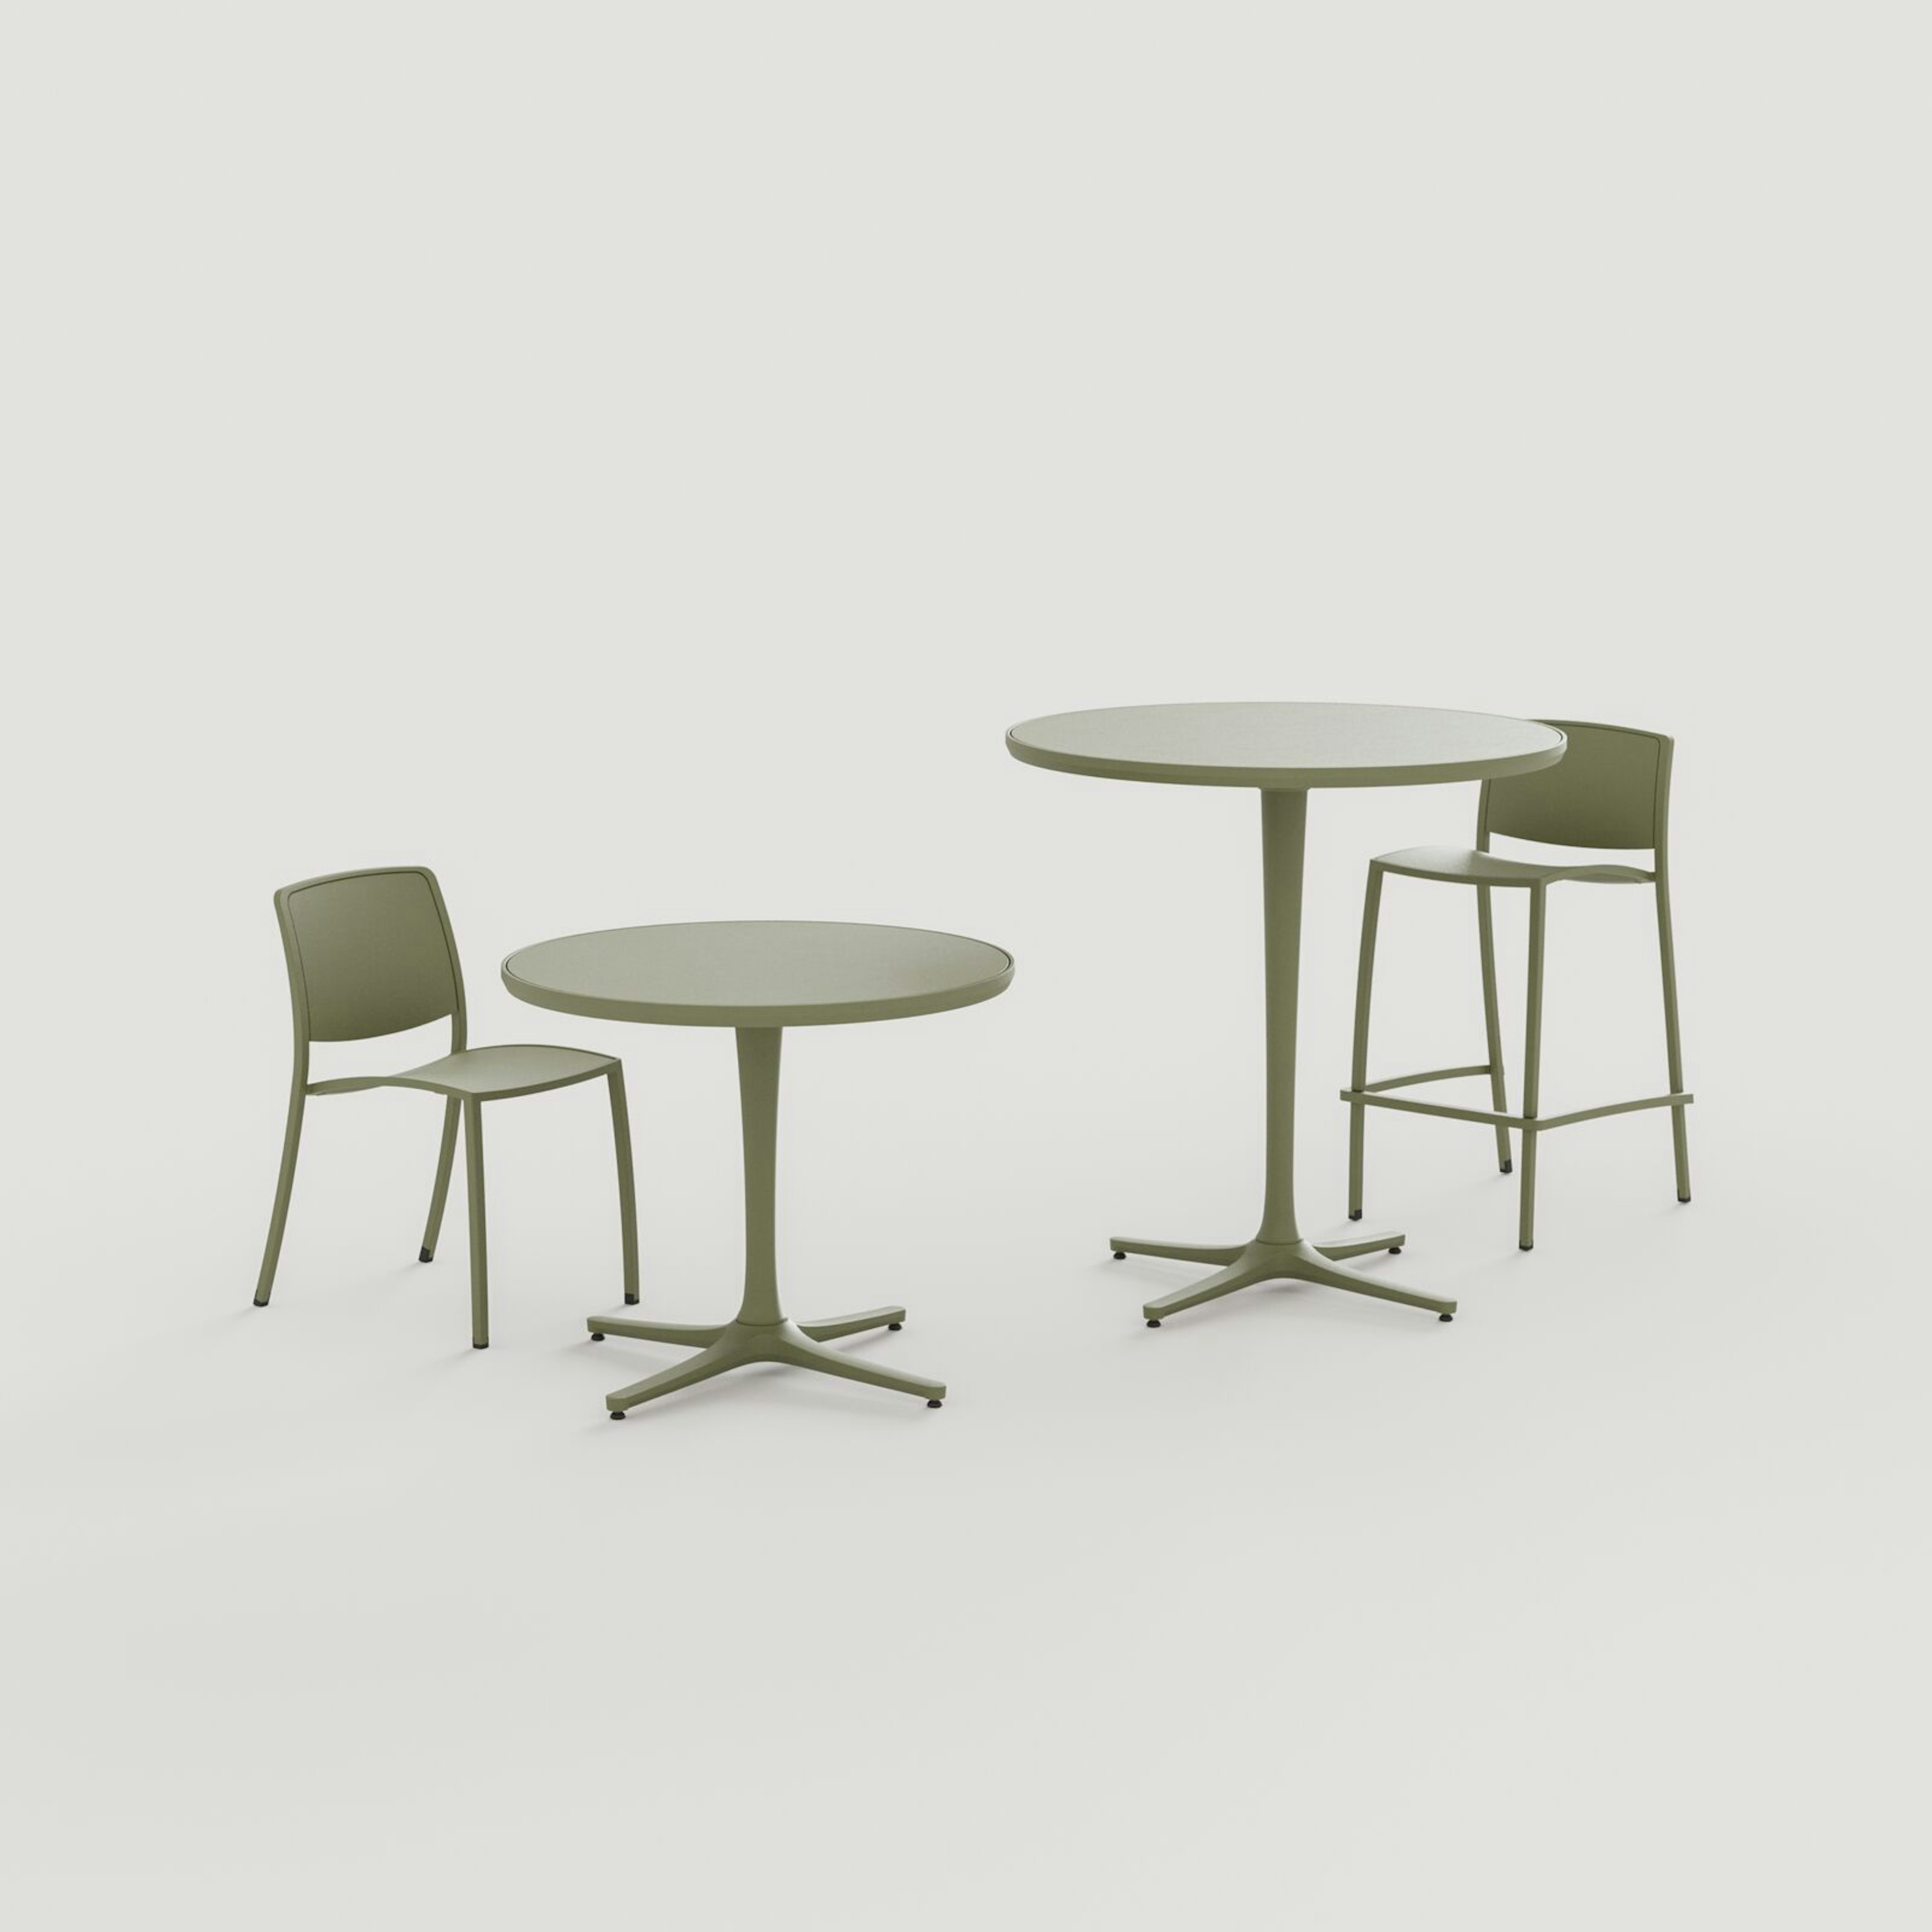 Avivo Pedestal Table: Olive Texture